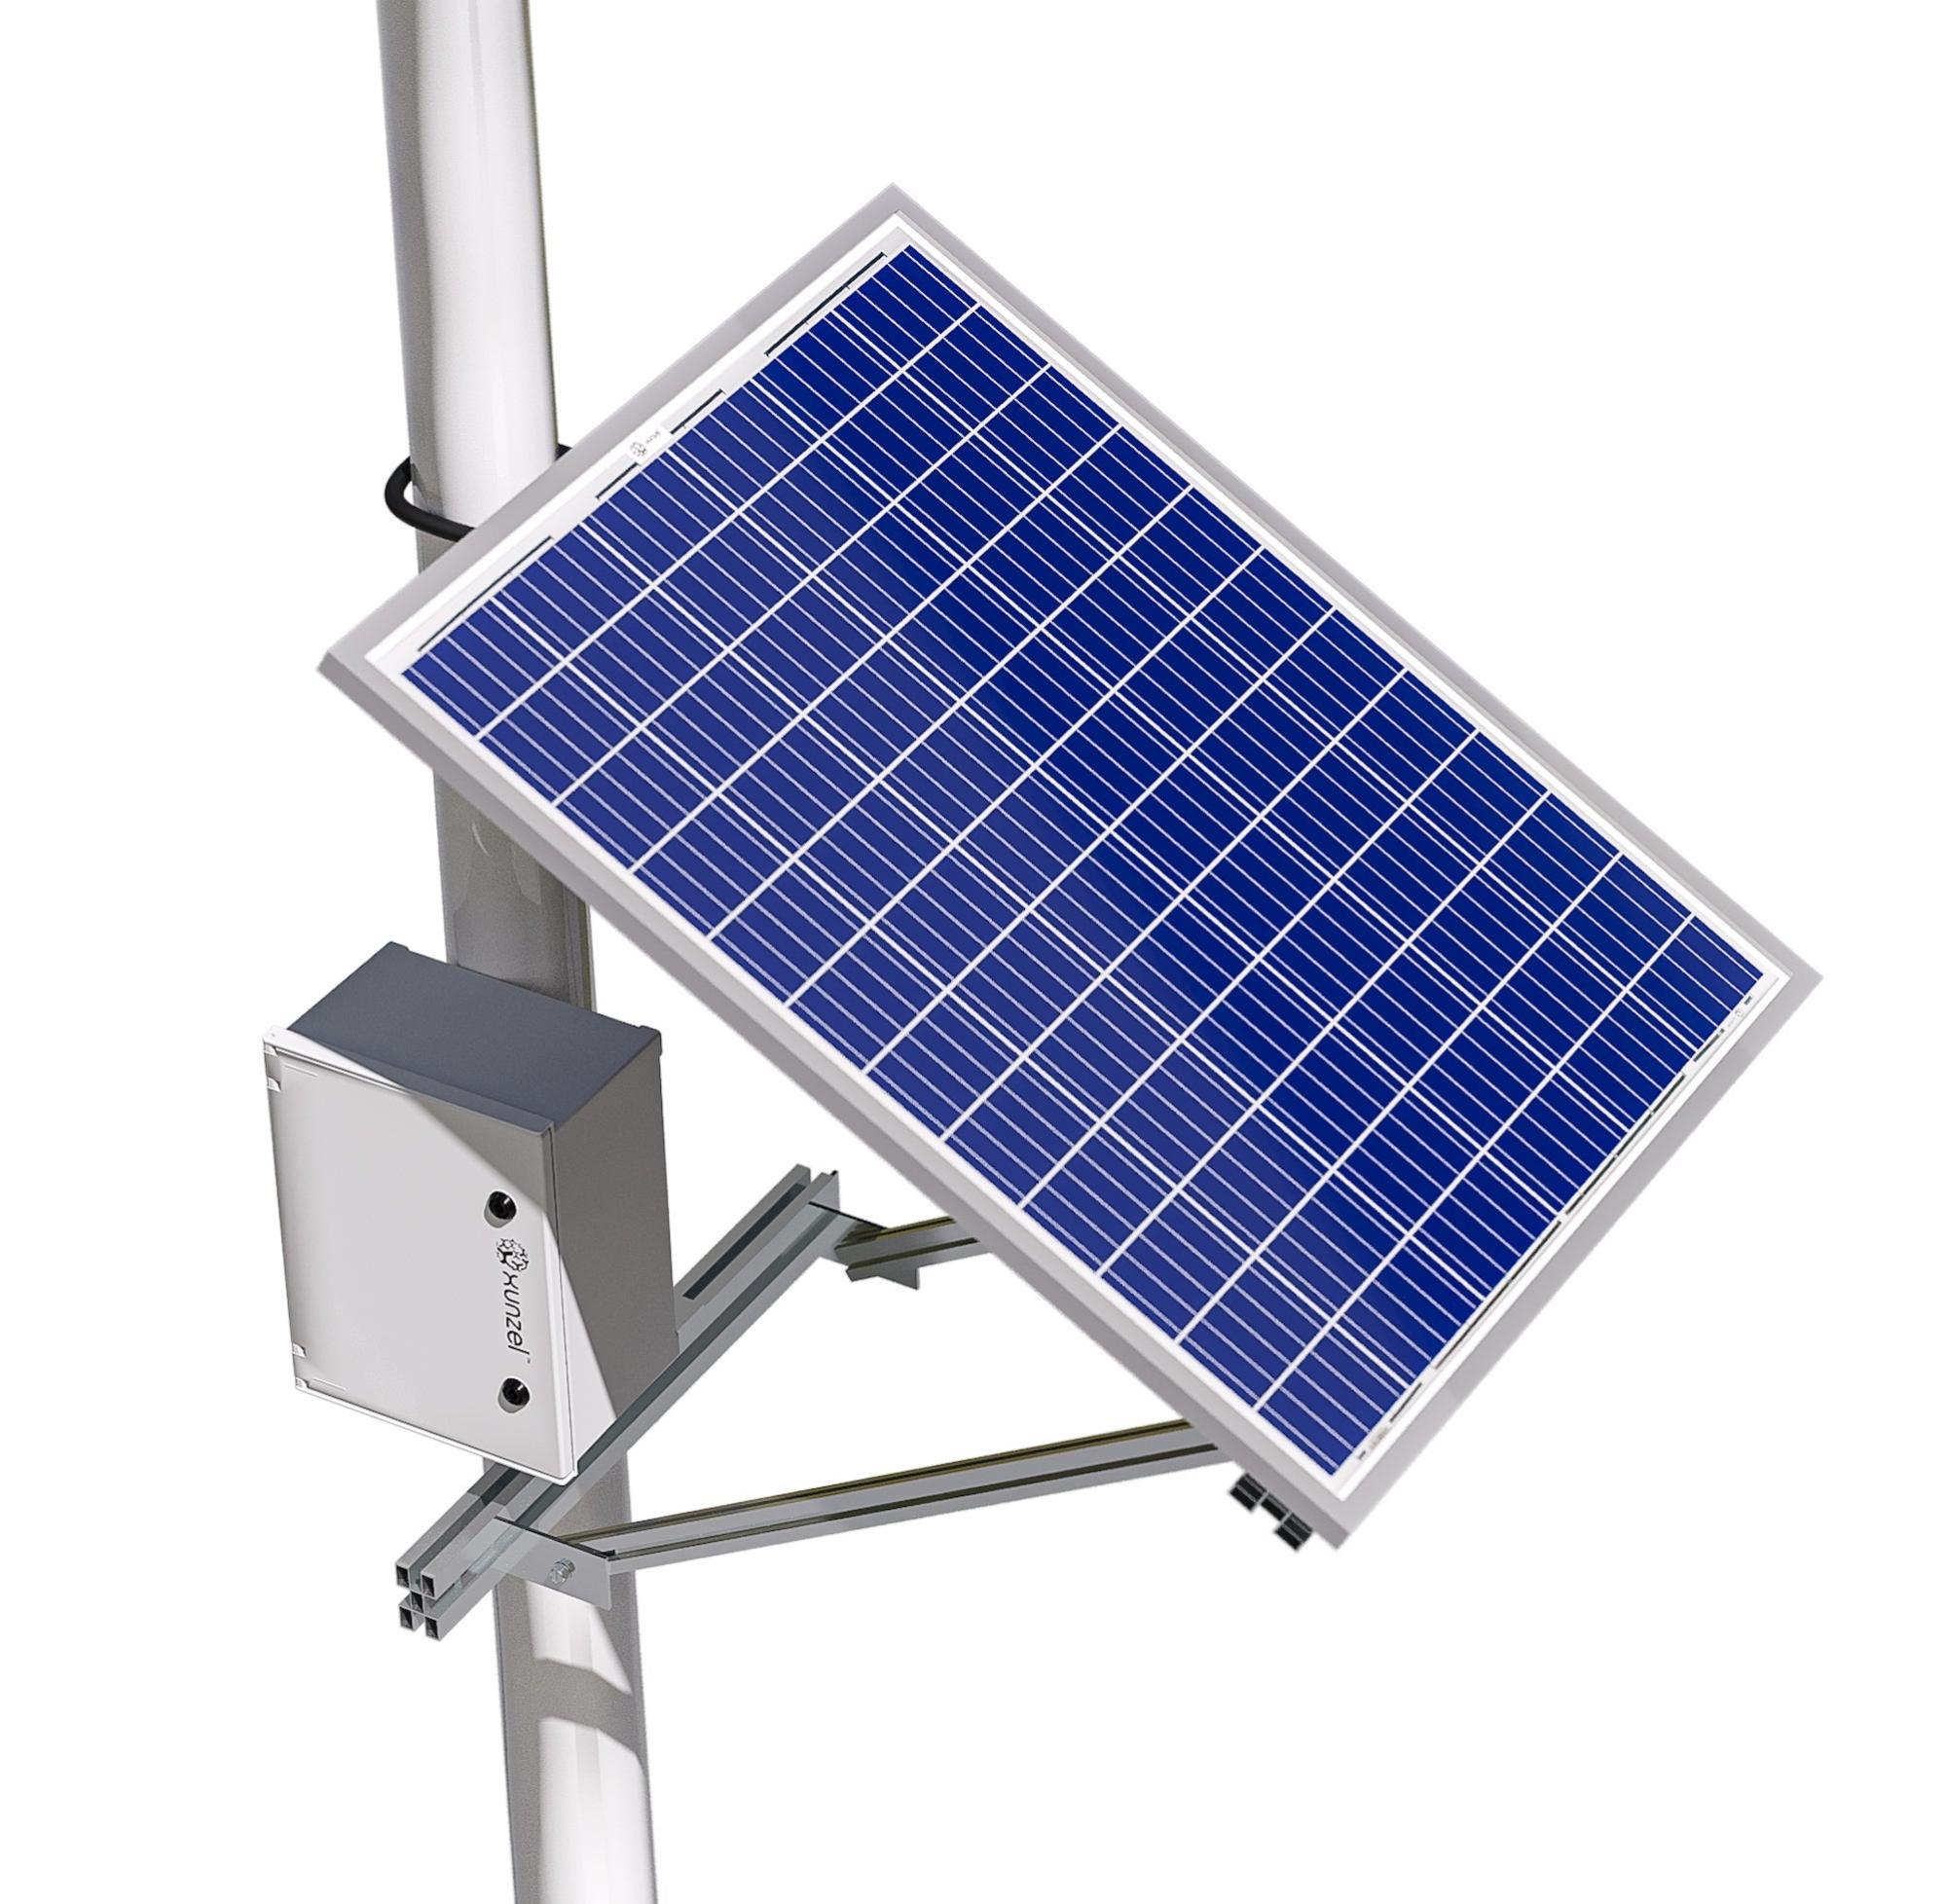 Soporte para poste solpolexlv2n30 para 1 panel solarpower-425w